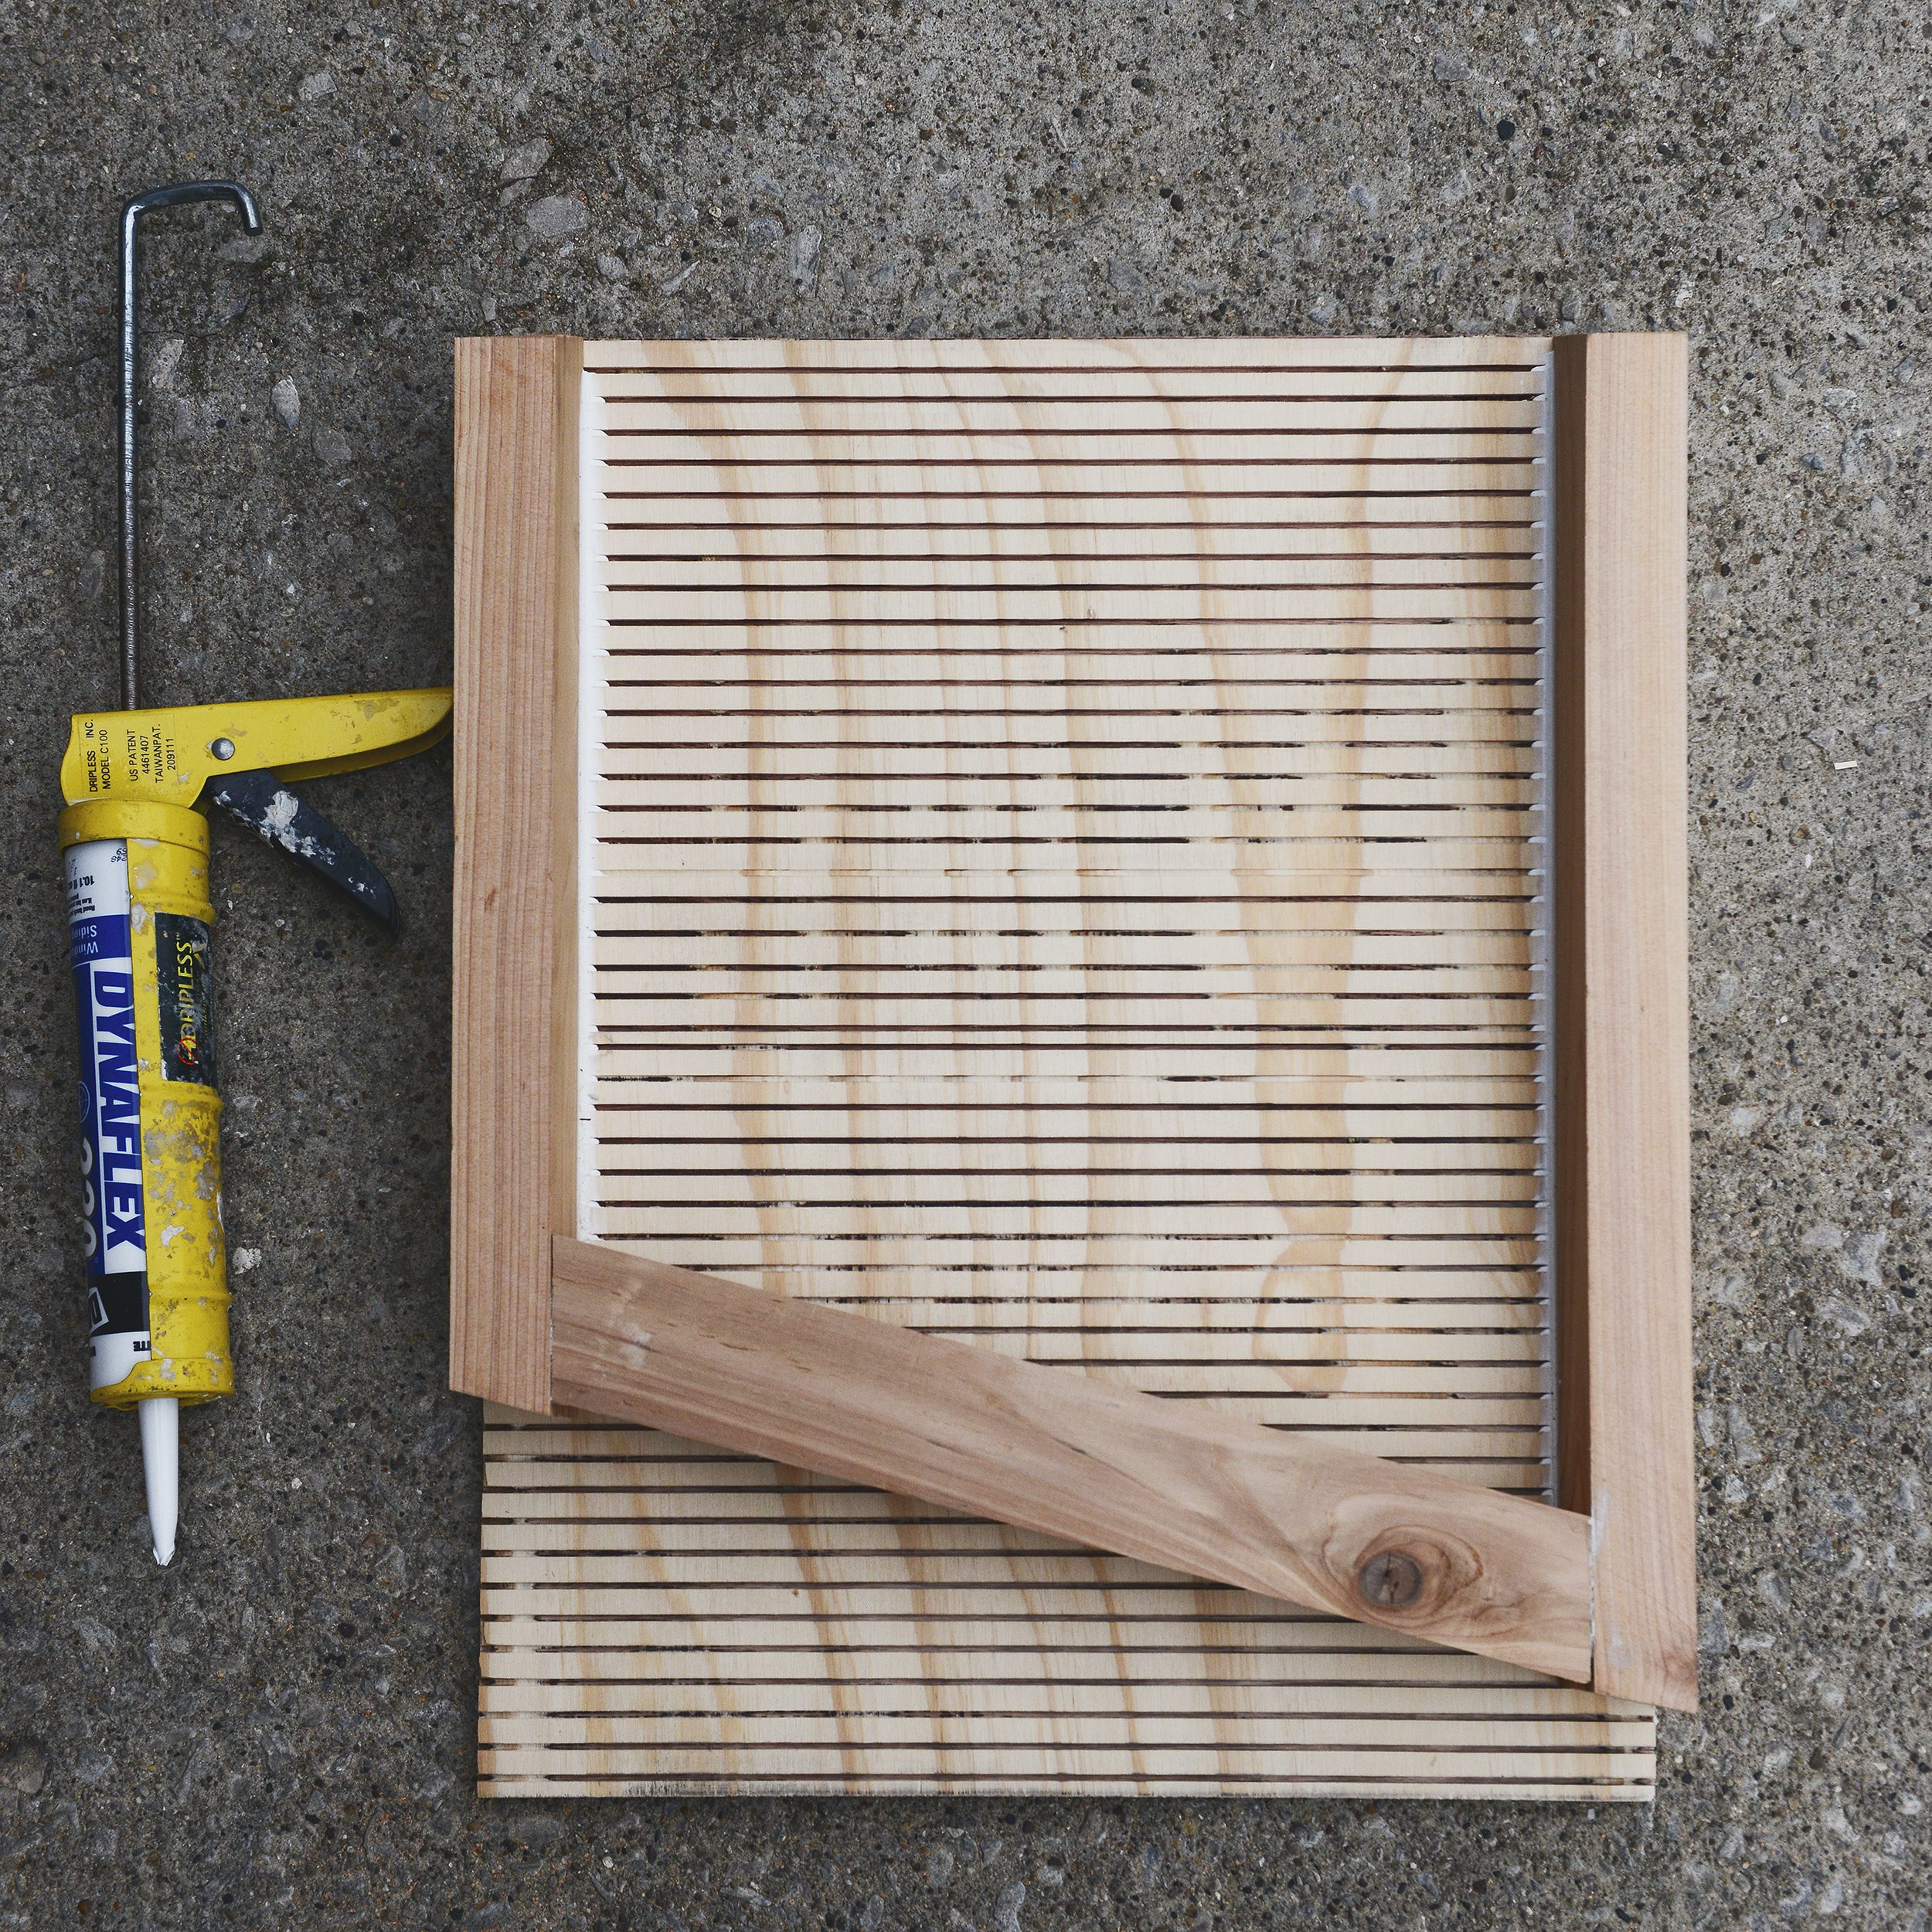 A partially completed DIY bat box // How-to build a bat box, DIY bat box via Yellow Brick Home